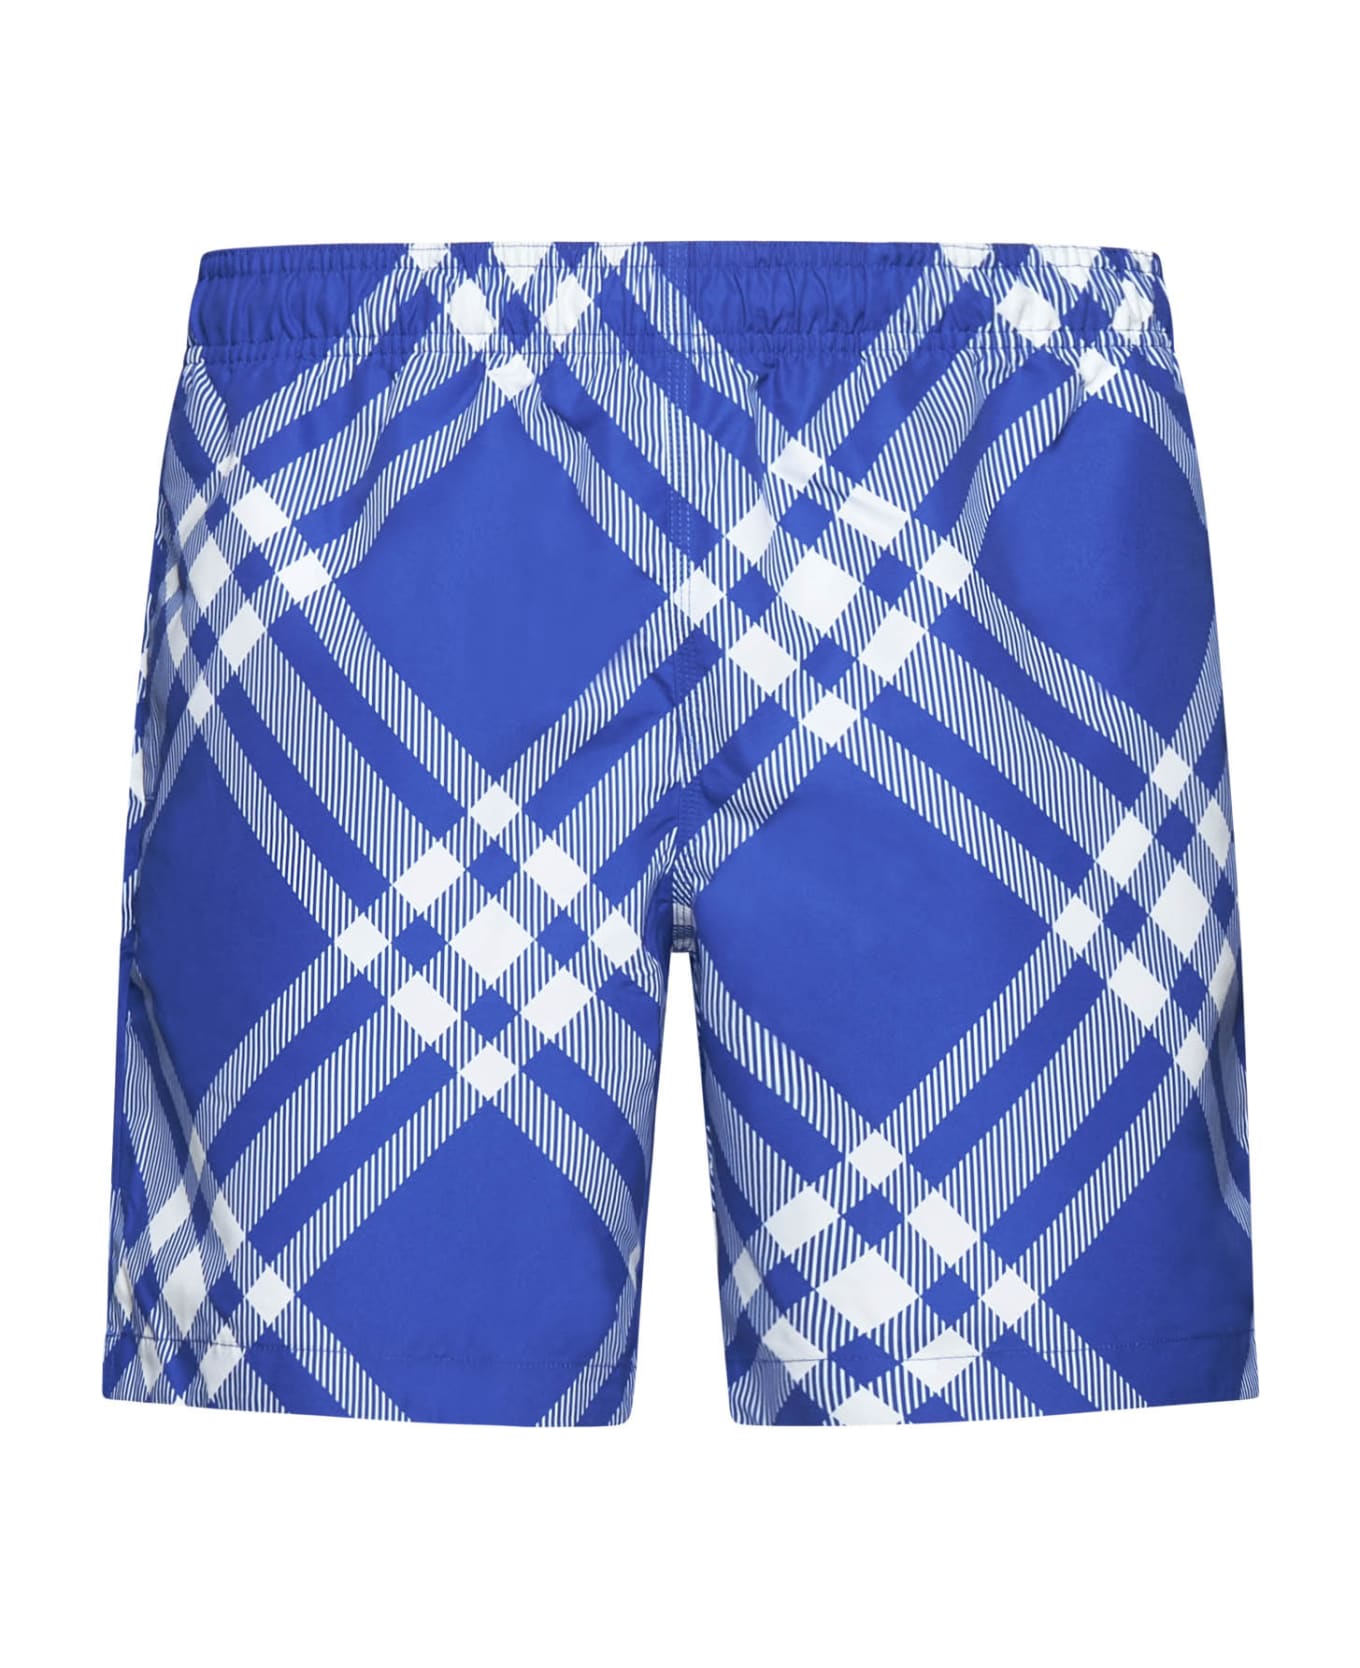 Burberry Check Printed Swim Shorts - Knight ip check 水着